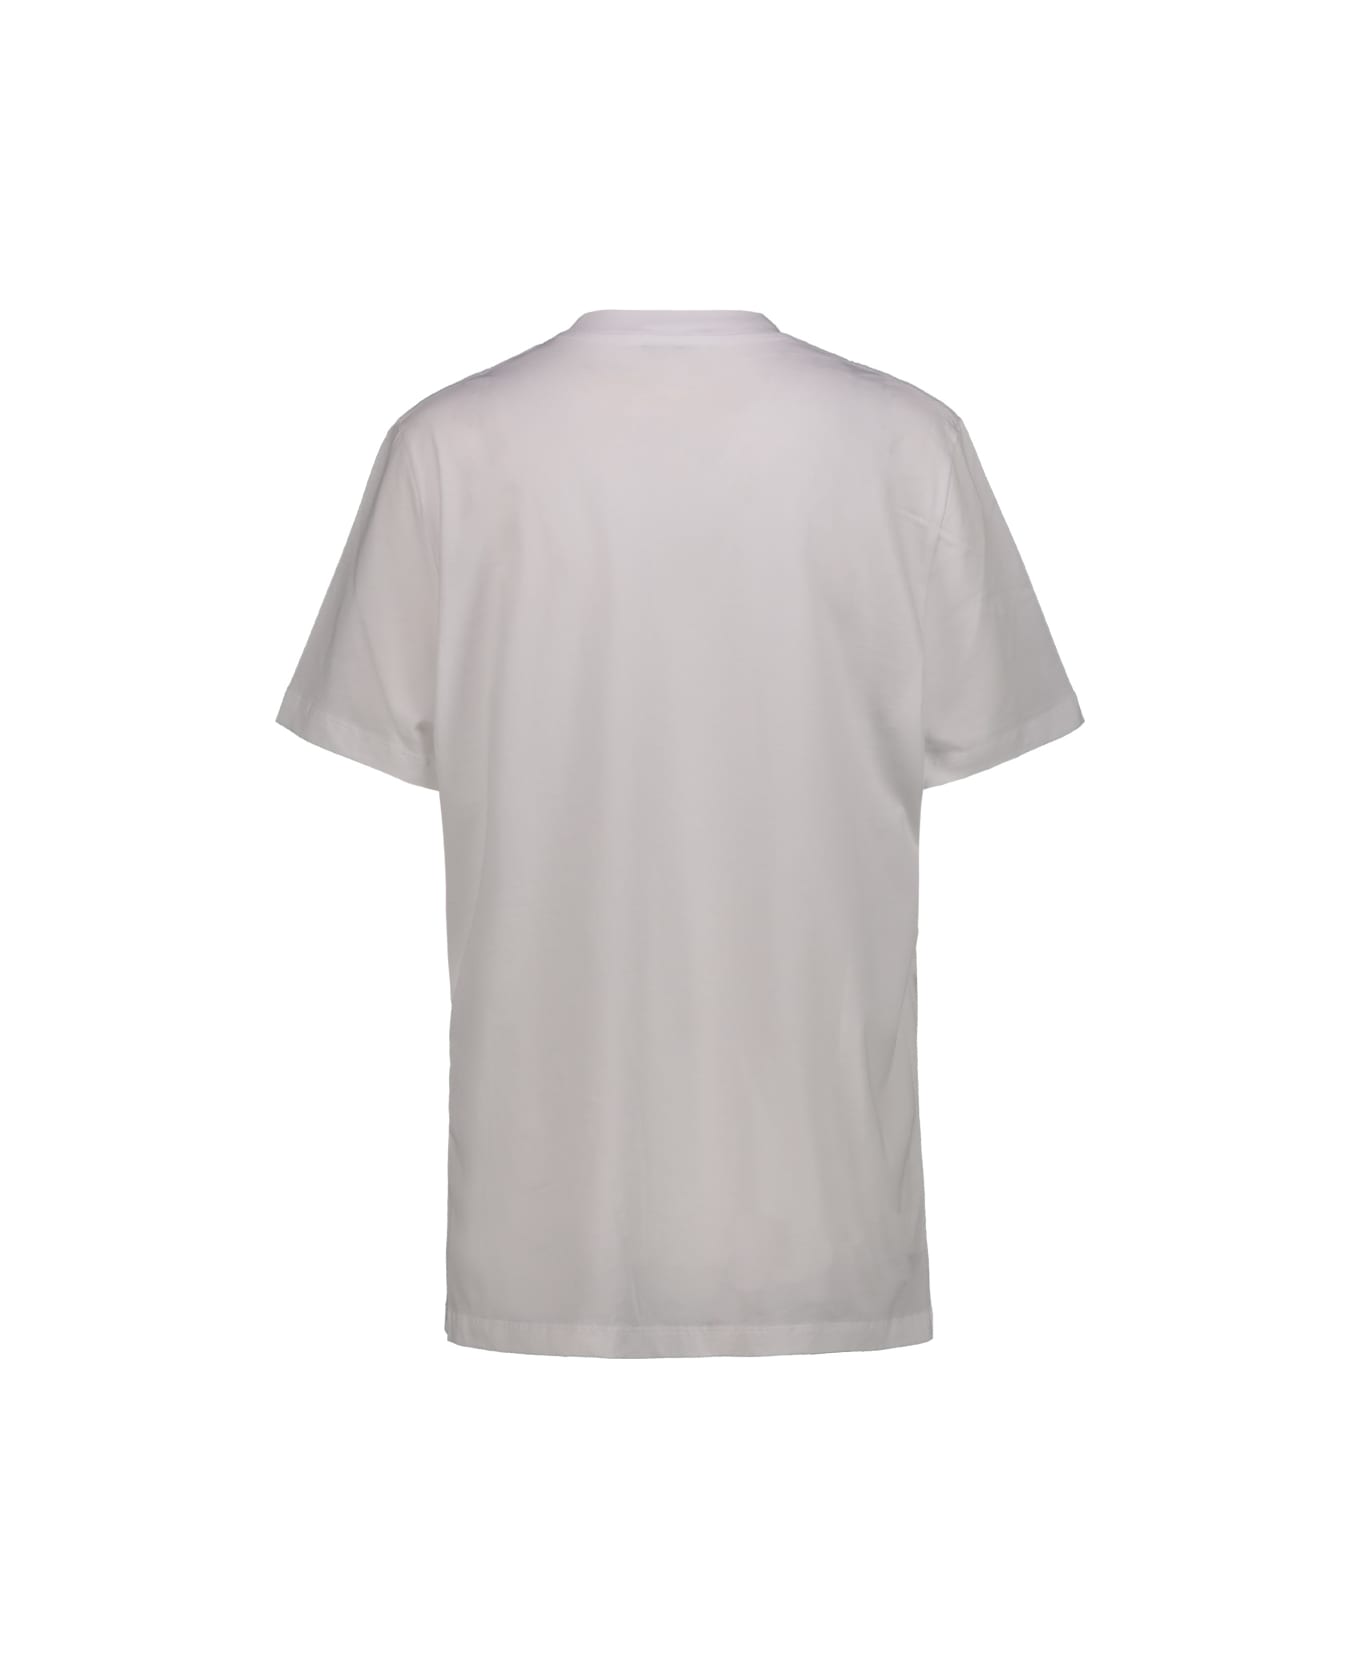 WARDROBE.NYC Classic T-shirt - Wht White Tシャツ